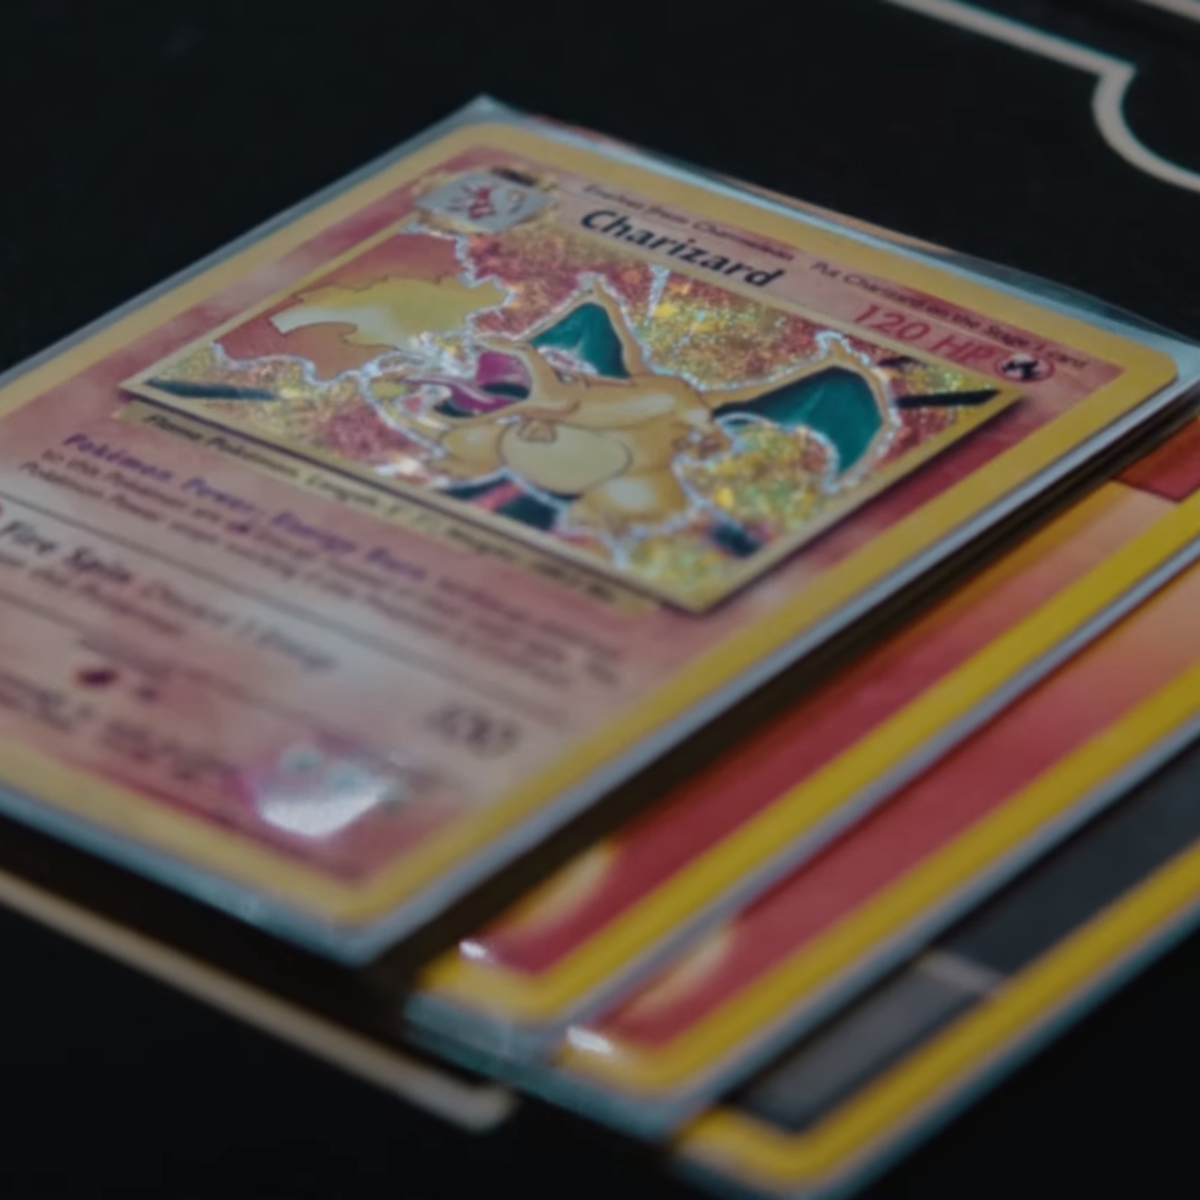 Pokémon TCG's nostalgic Classic set - featuring OG Venusaur